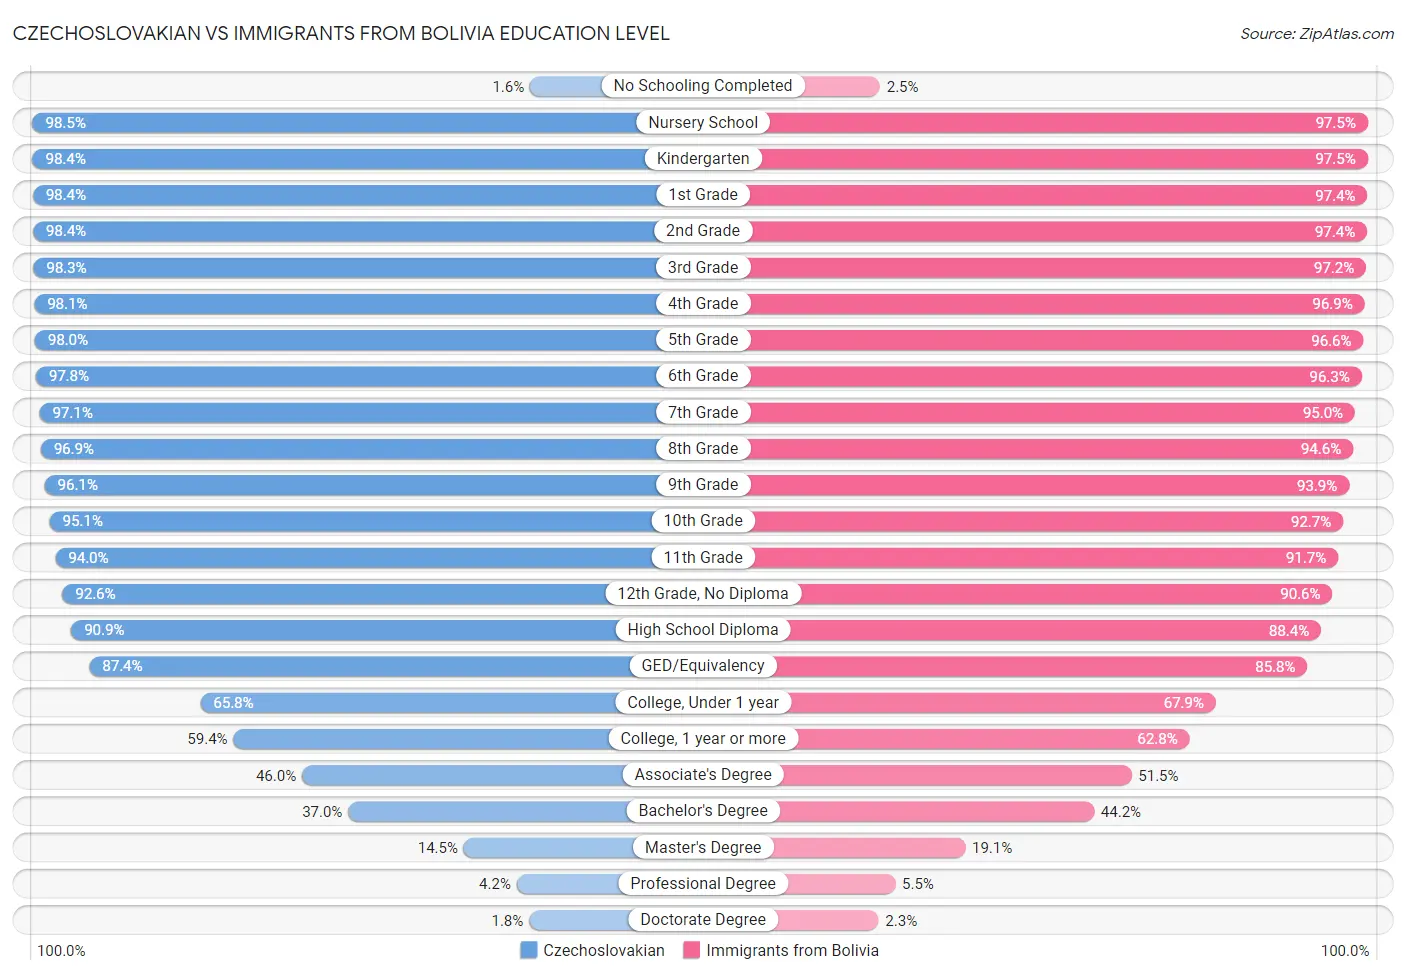 Czechoslovakian vs Immigrants from Bolivia Education Level